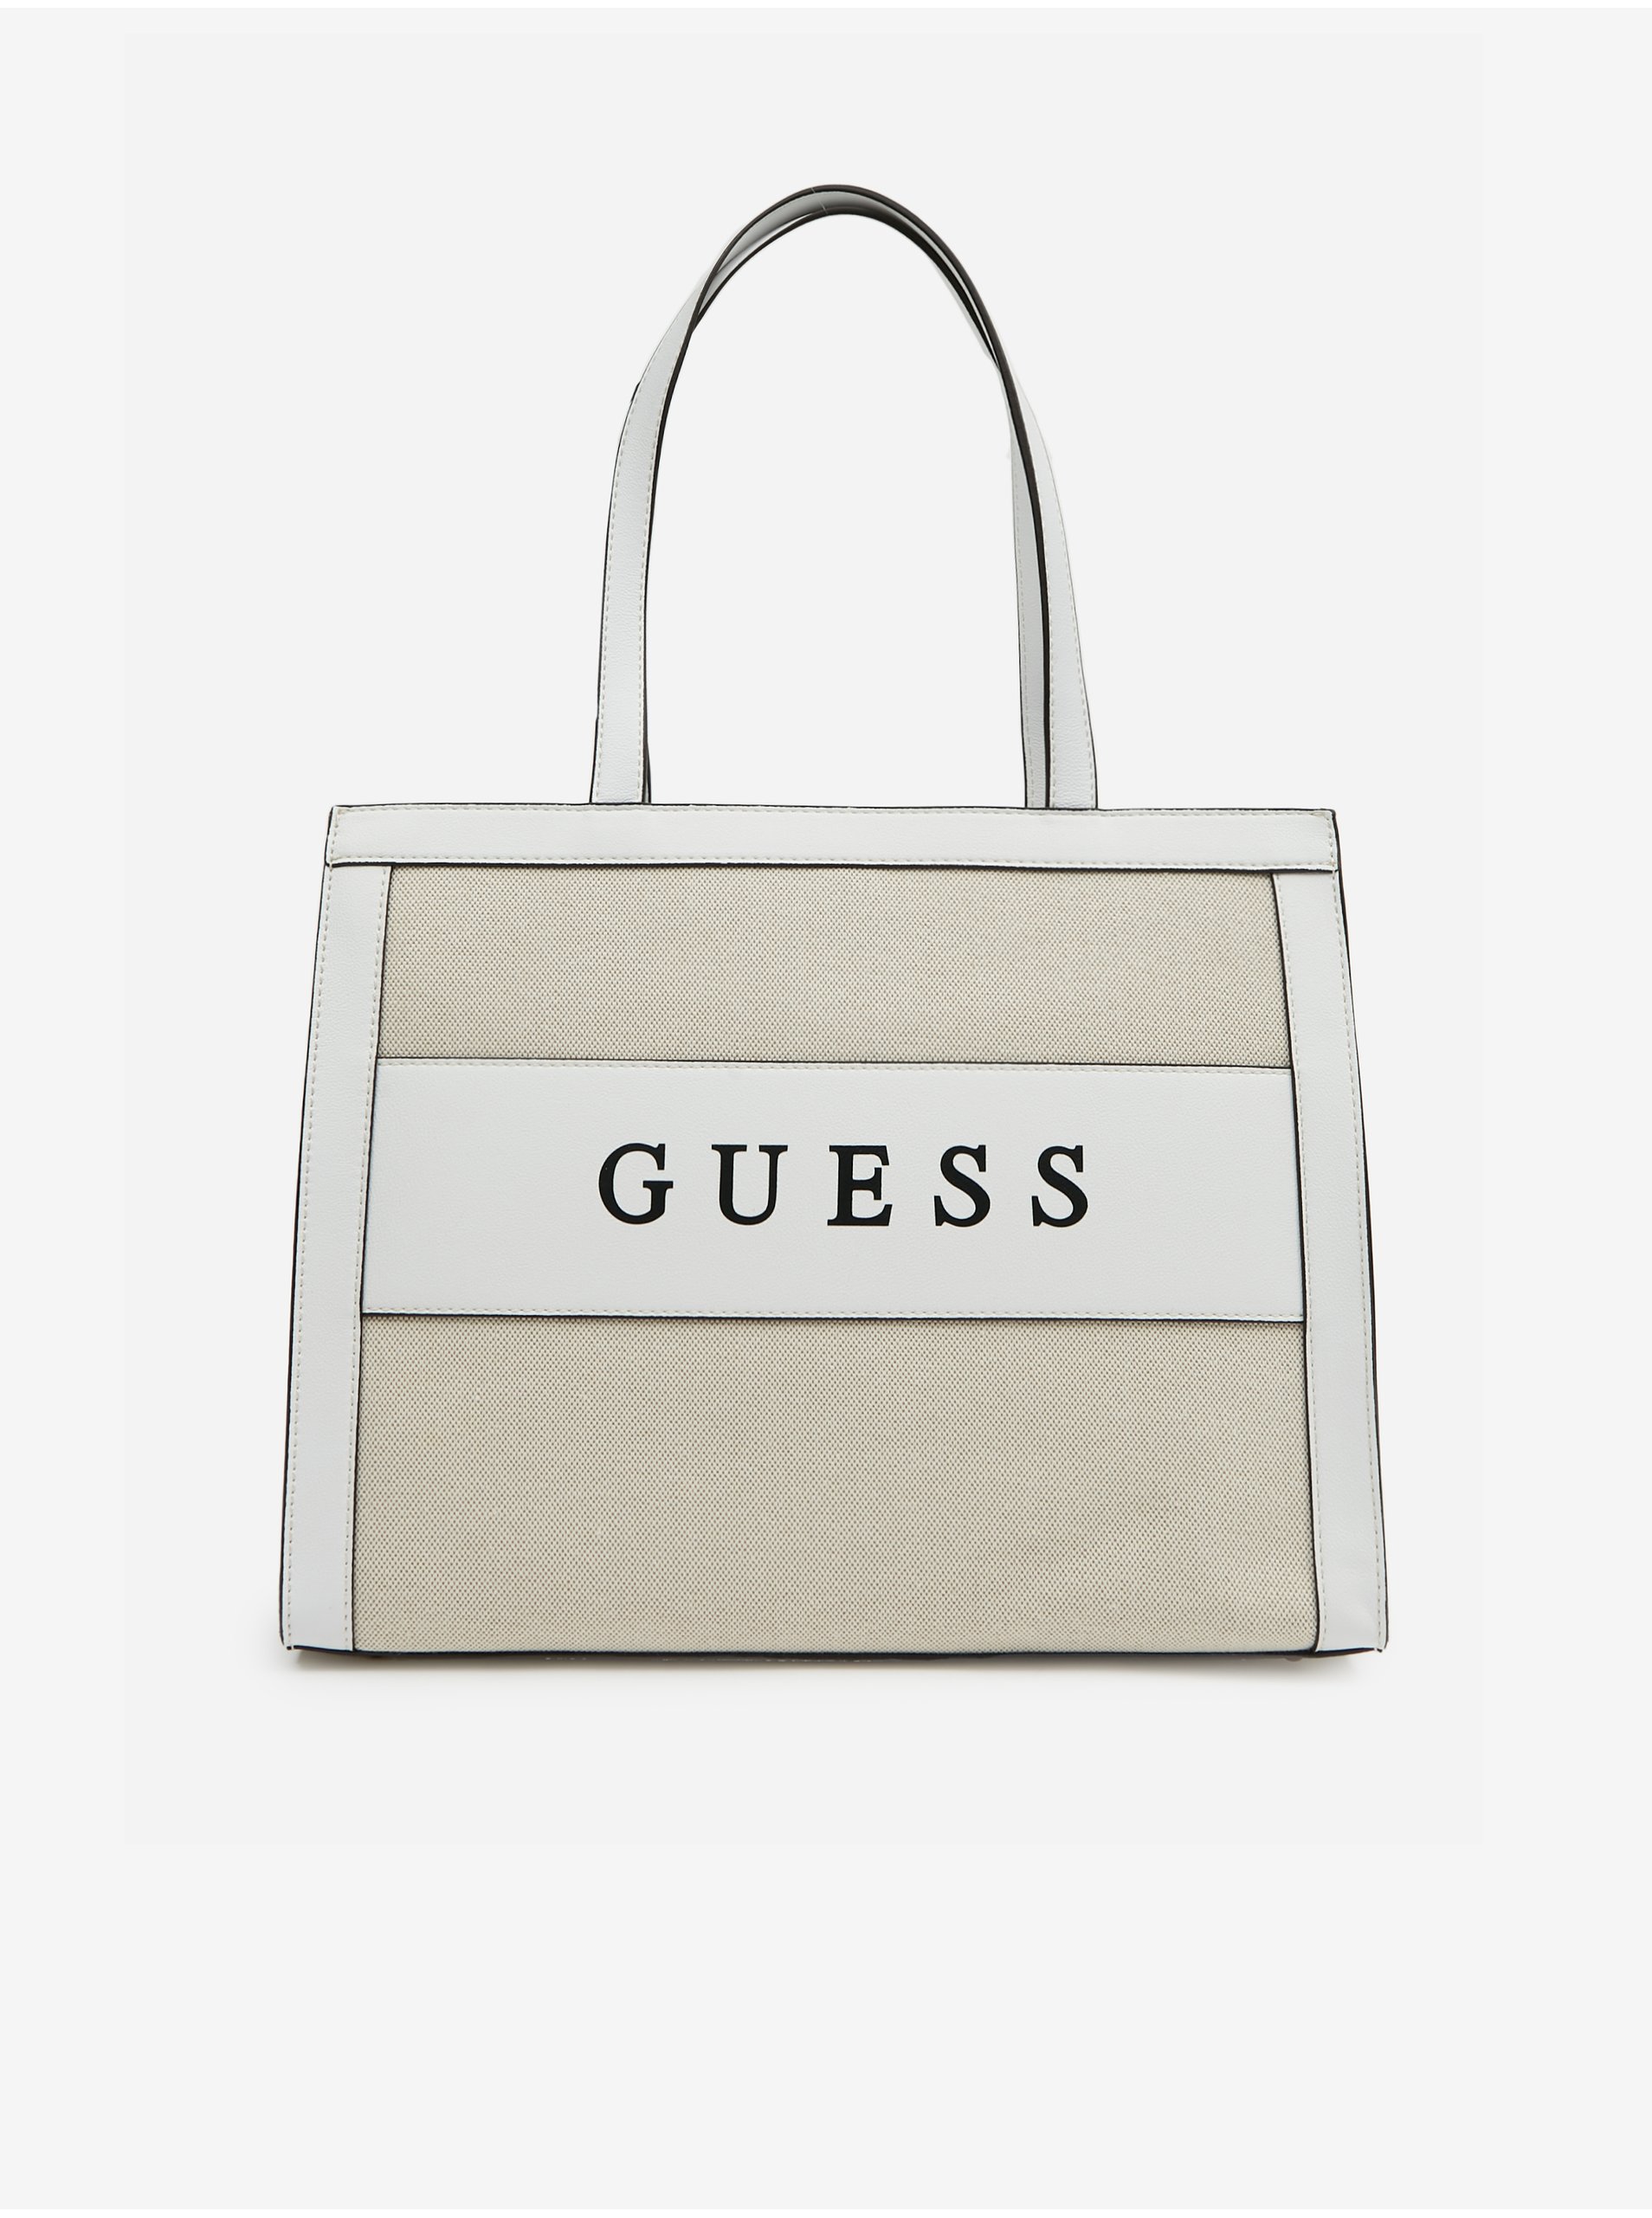 Women's handbag Guess